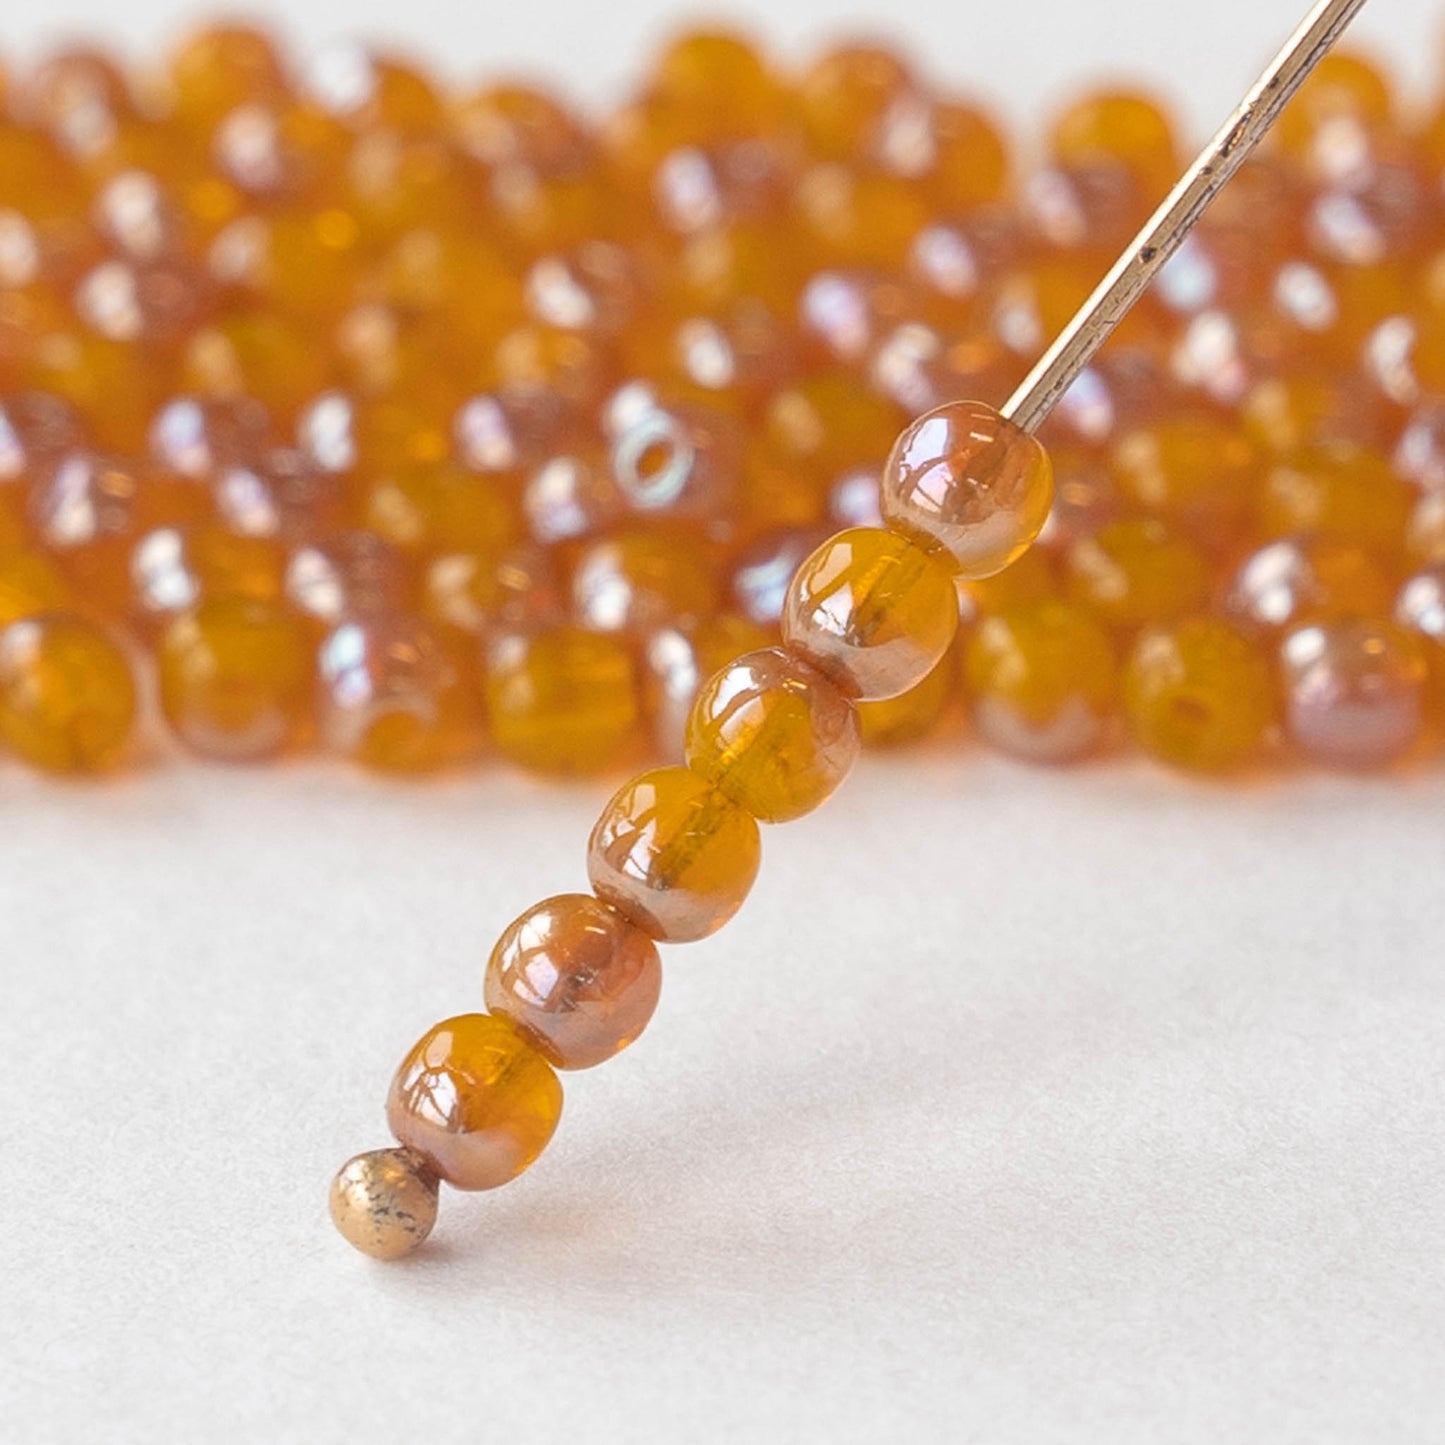 3mm Round Glass Beads - Orange AB - 120